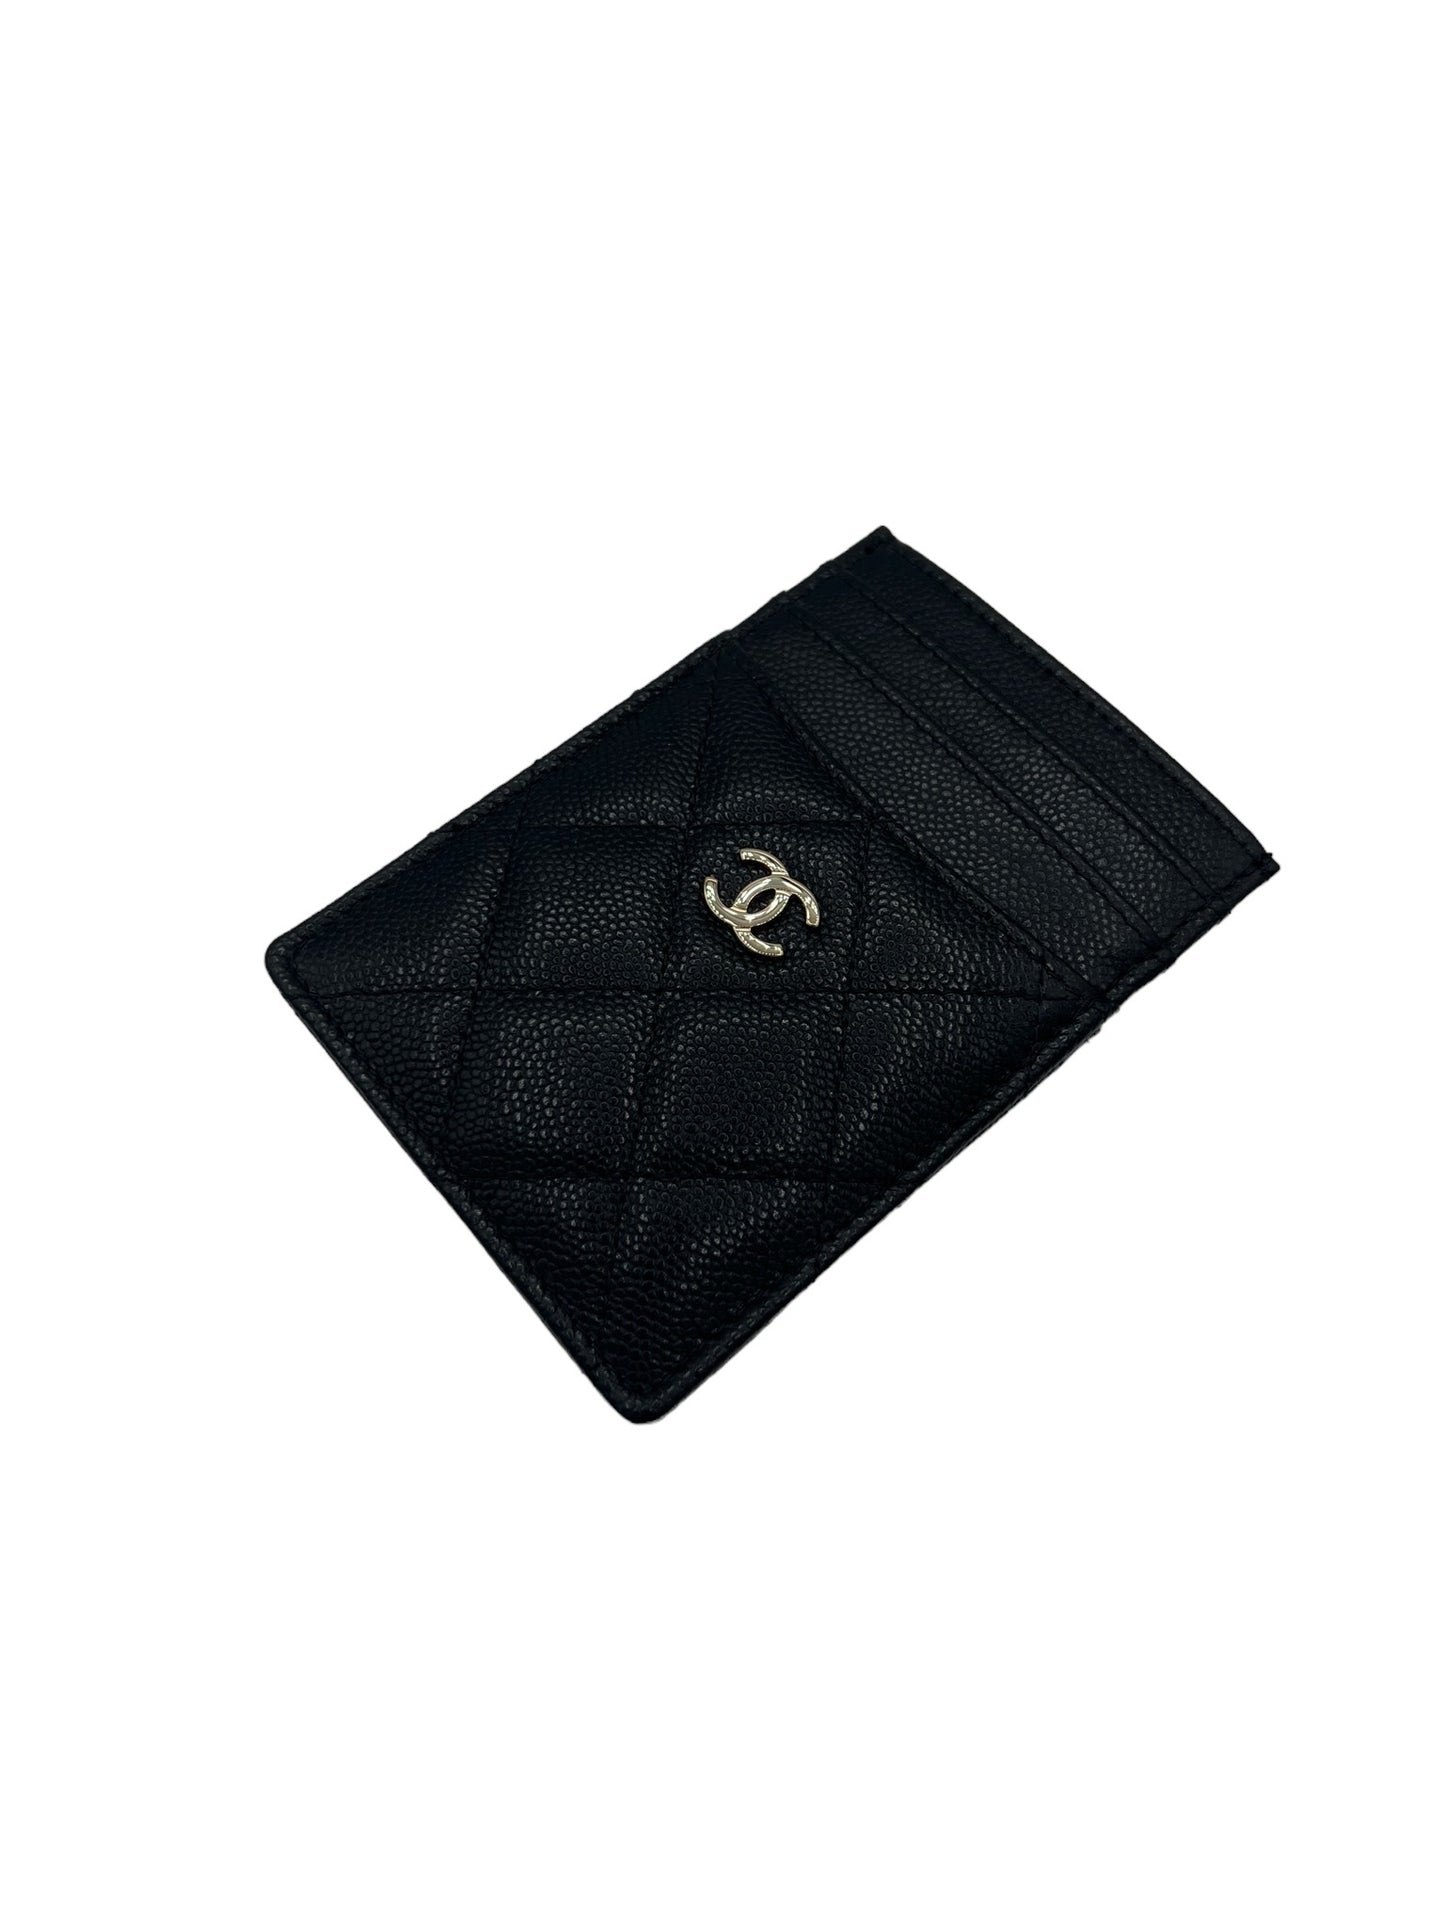 CHANEL - Black Caviar Skin Card Holder